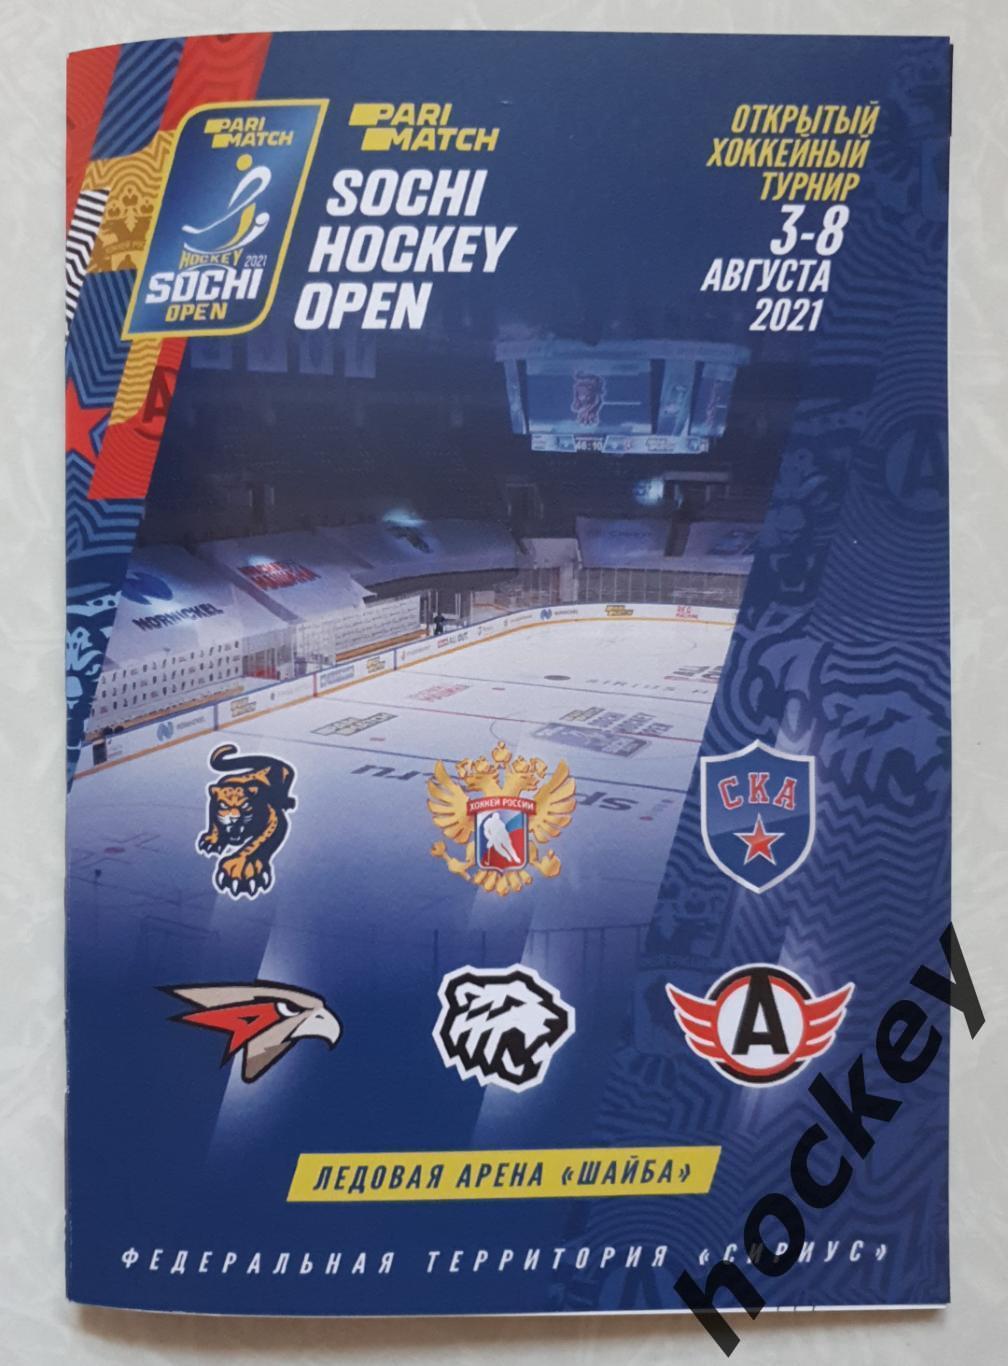 Sochi hockey open-2021:Сочи, СКА, Трактор, Авангард, Автомобилист, Россия олимп.